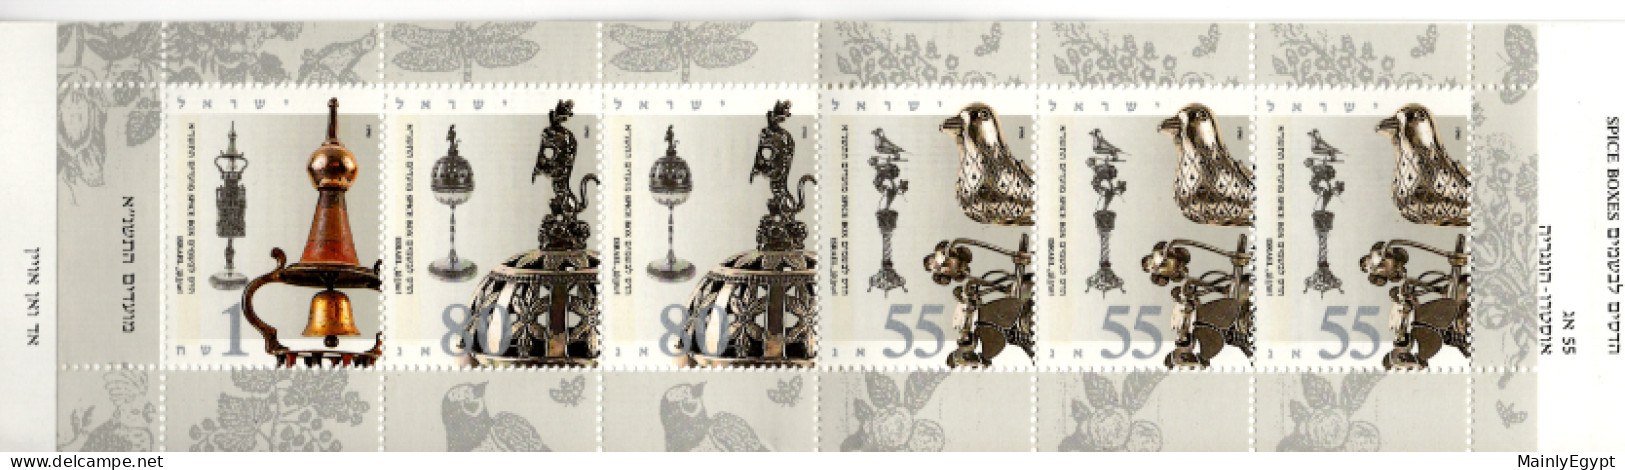 ISRAEL:  Stamp Booklet 1990 Jewish Feasts MNH #F036 - Carnets